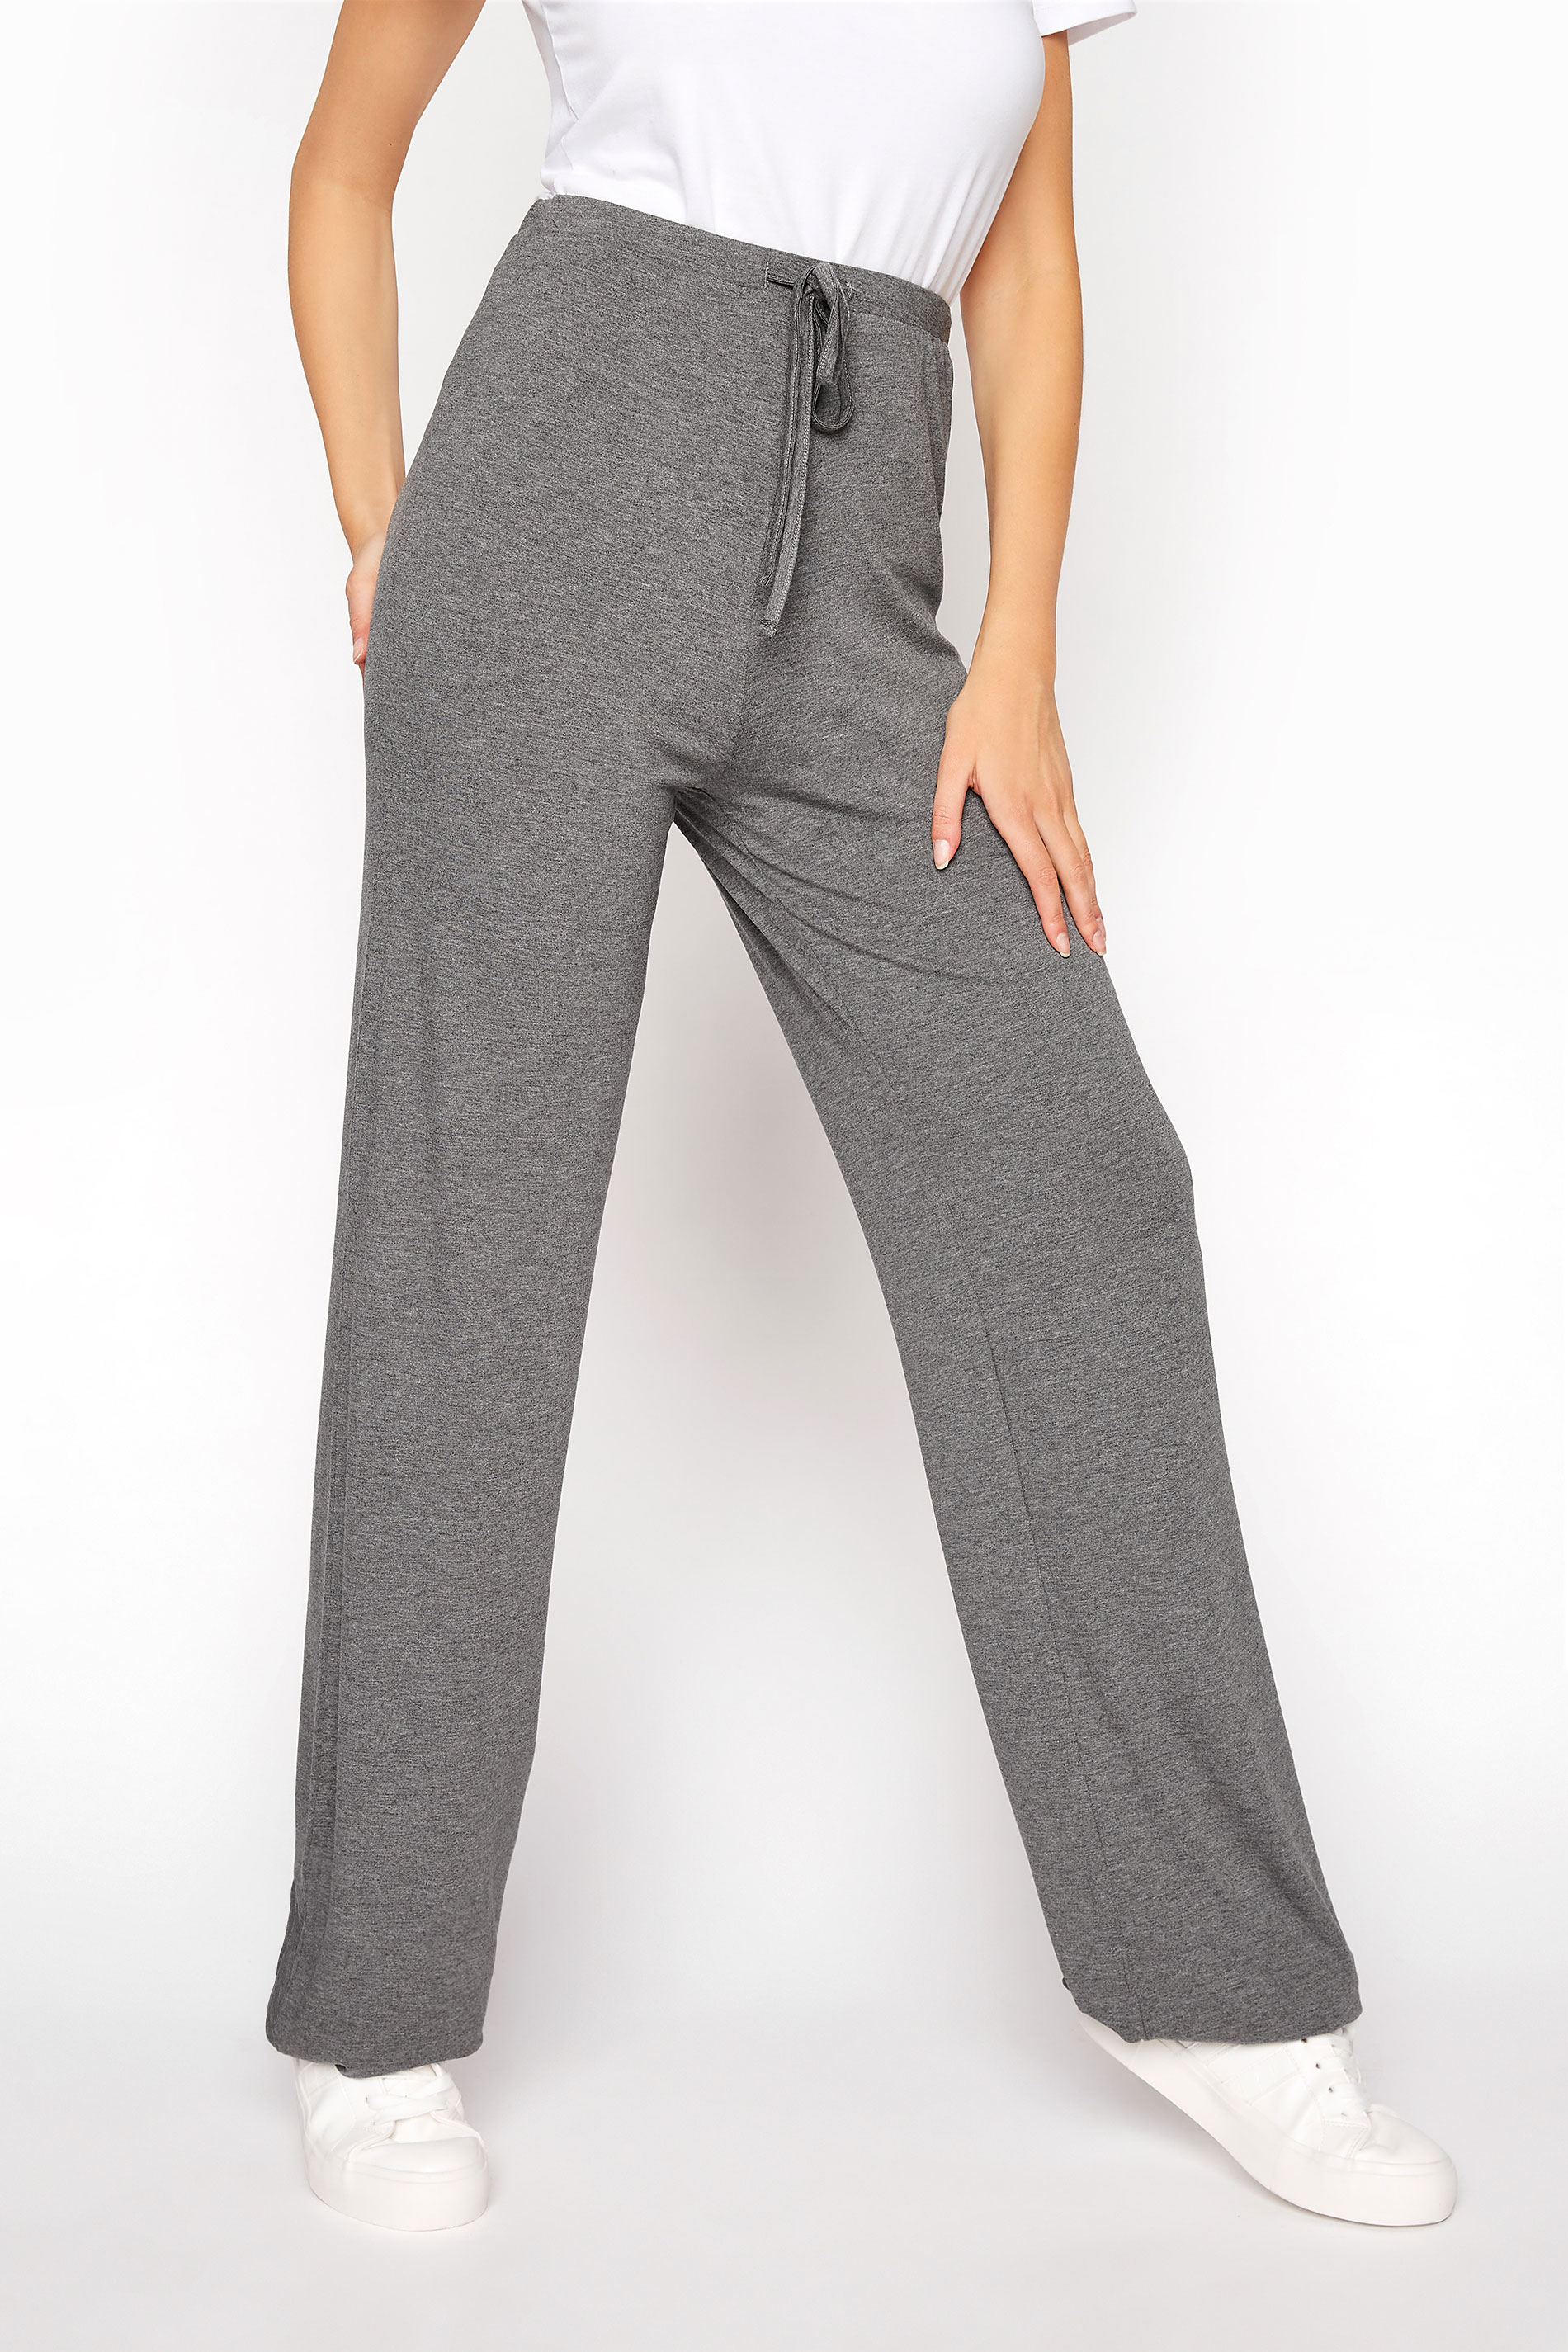 LTS Grey Yoga Pants | Long Tall Sally